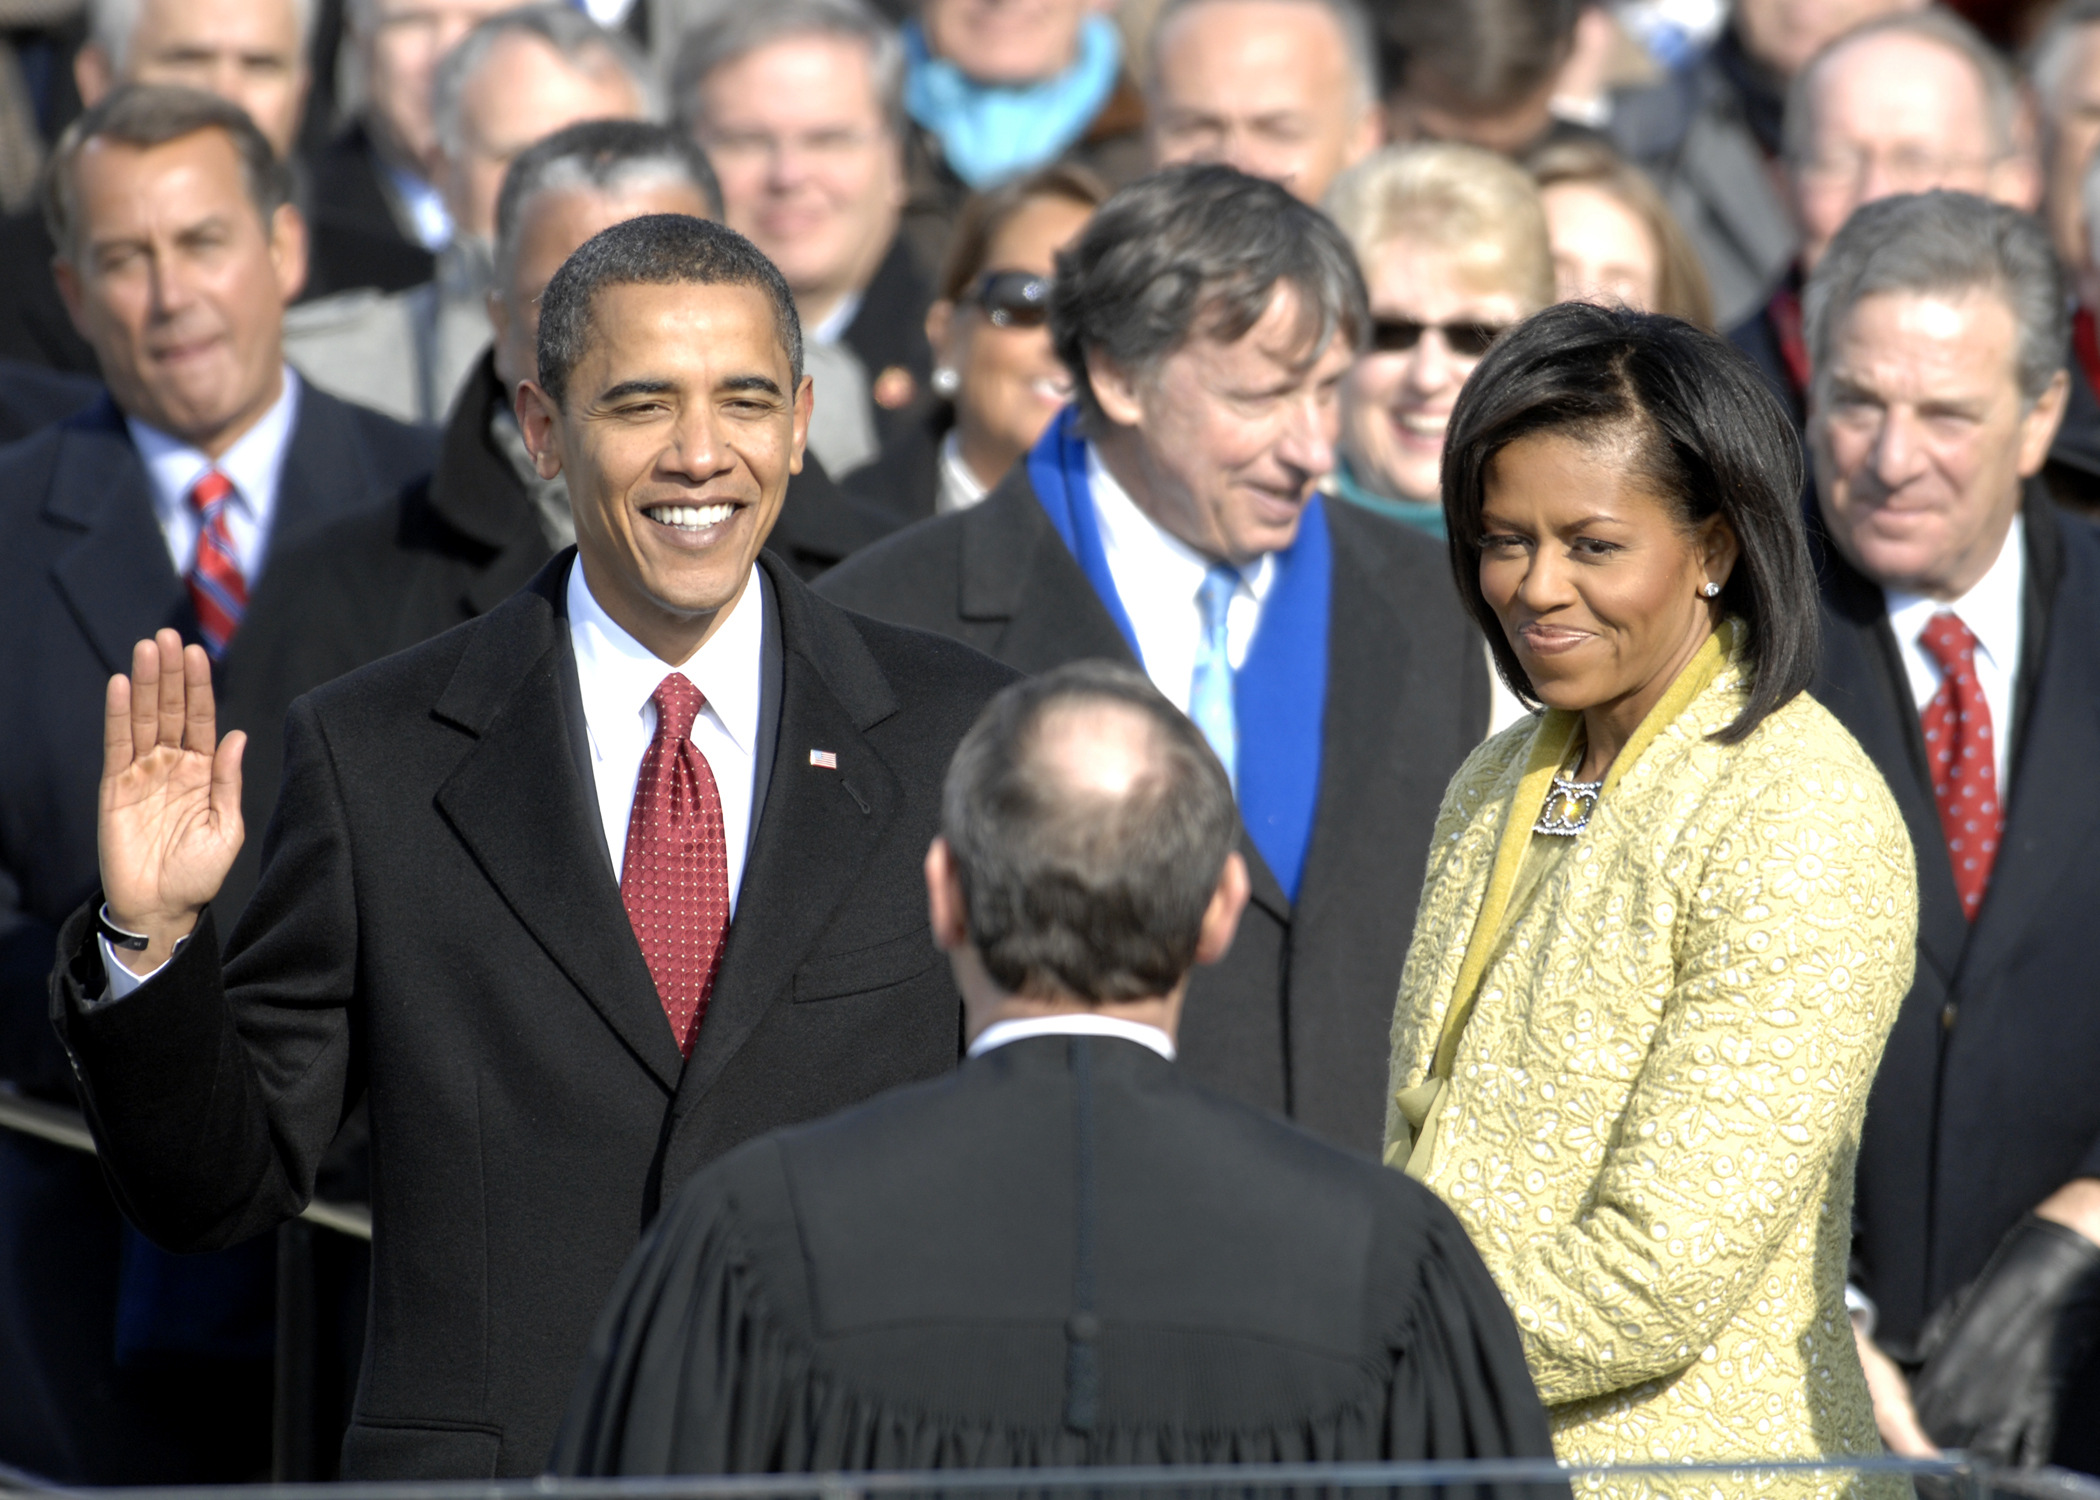 First inauguration of Barack Obama - Wikipedia